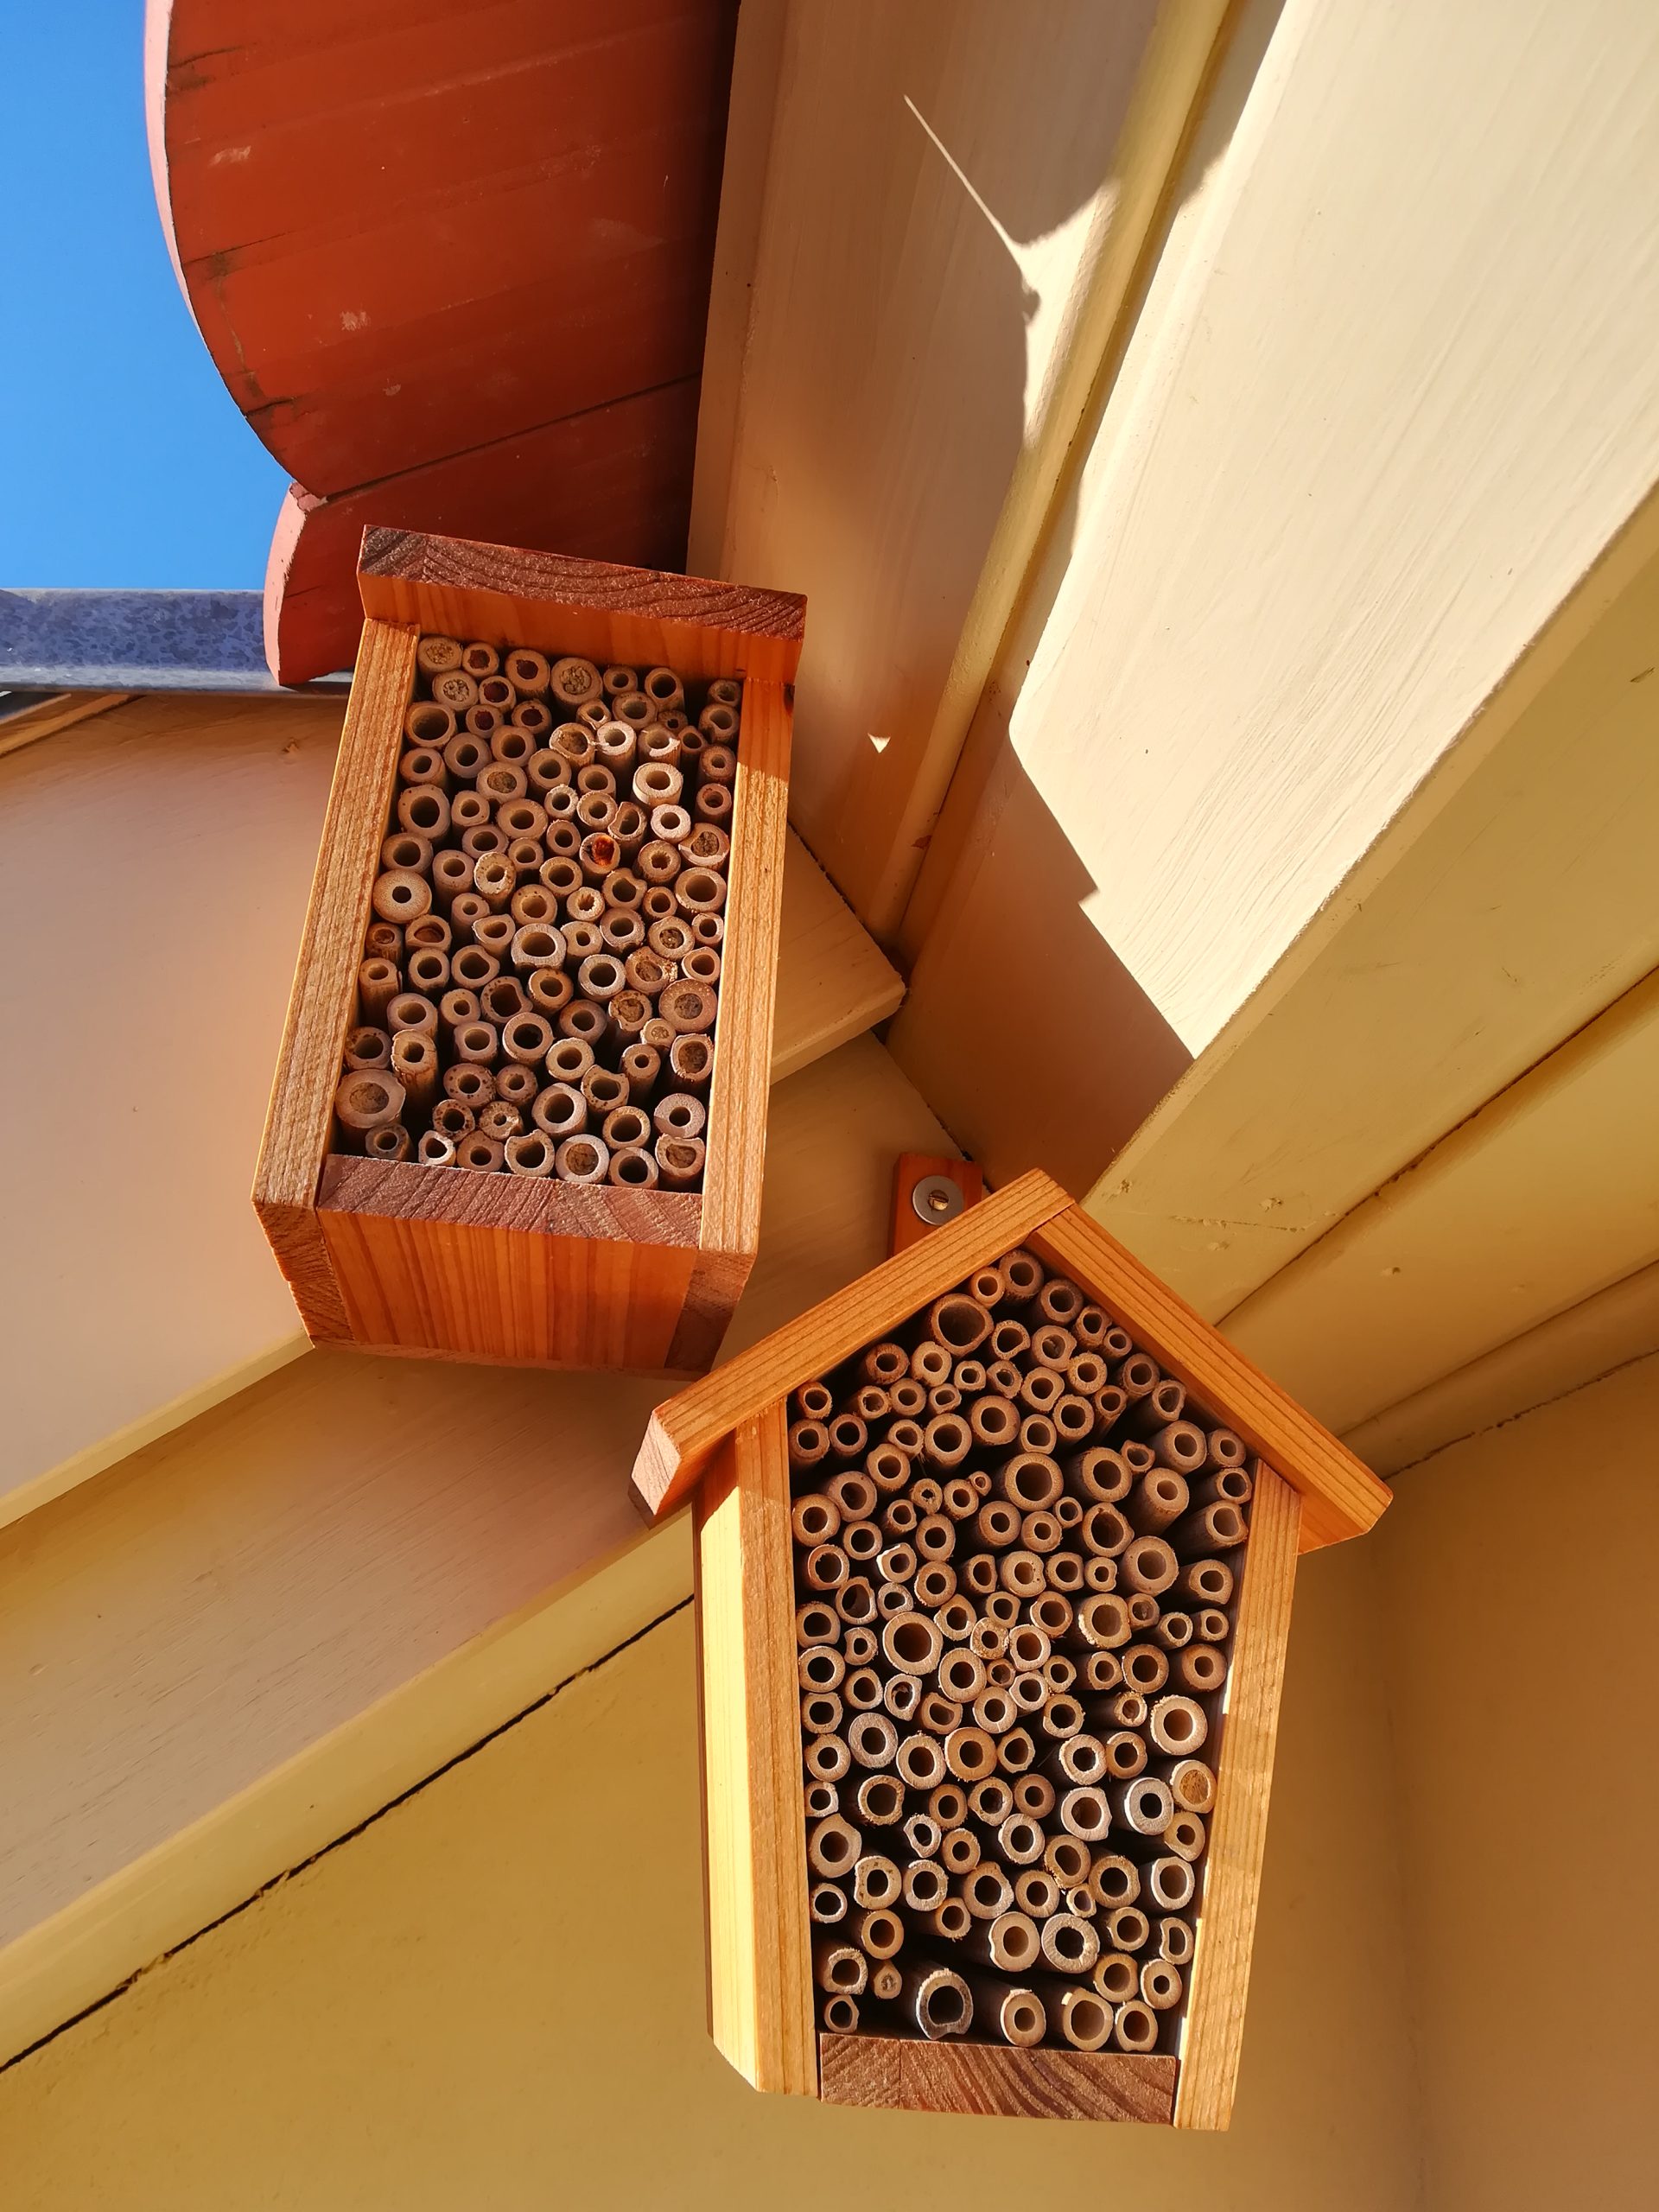 Rote Mauerbiene, Biene, Frühling, Nistplatz, Balkon